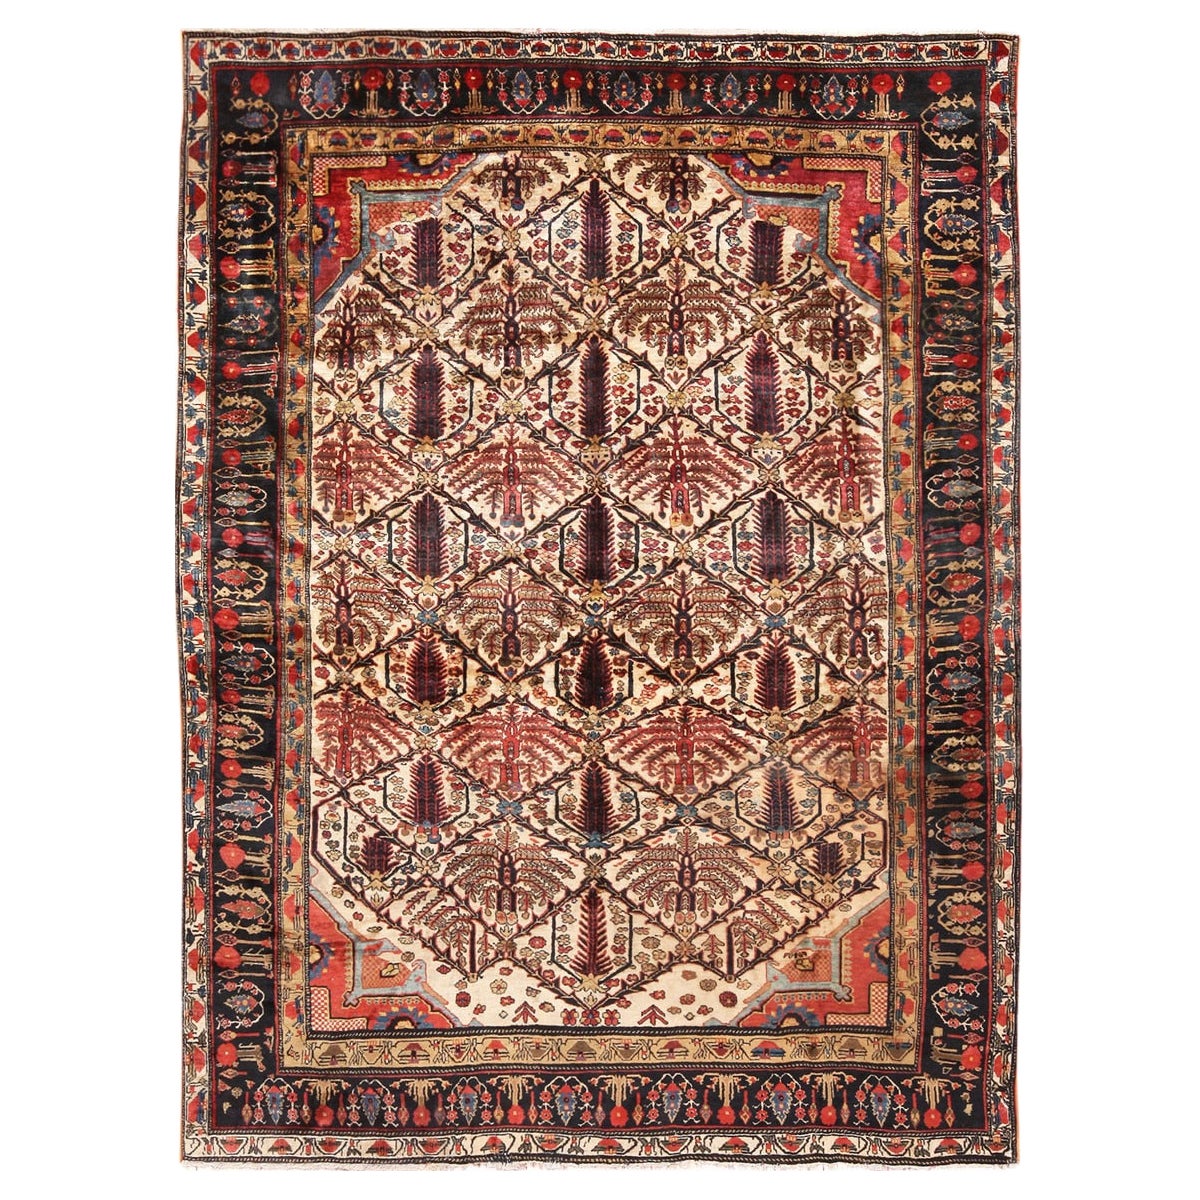 Antique Persian Silk Heriz Carpet. 4 ft 8 in x 6 ft